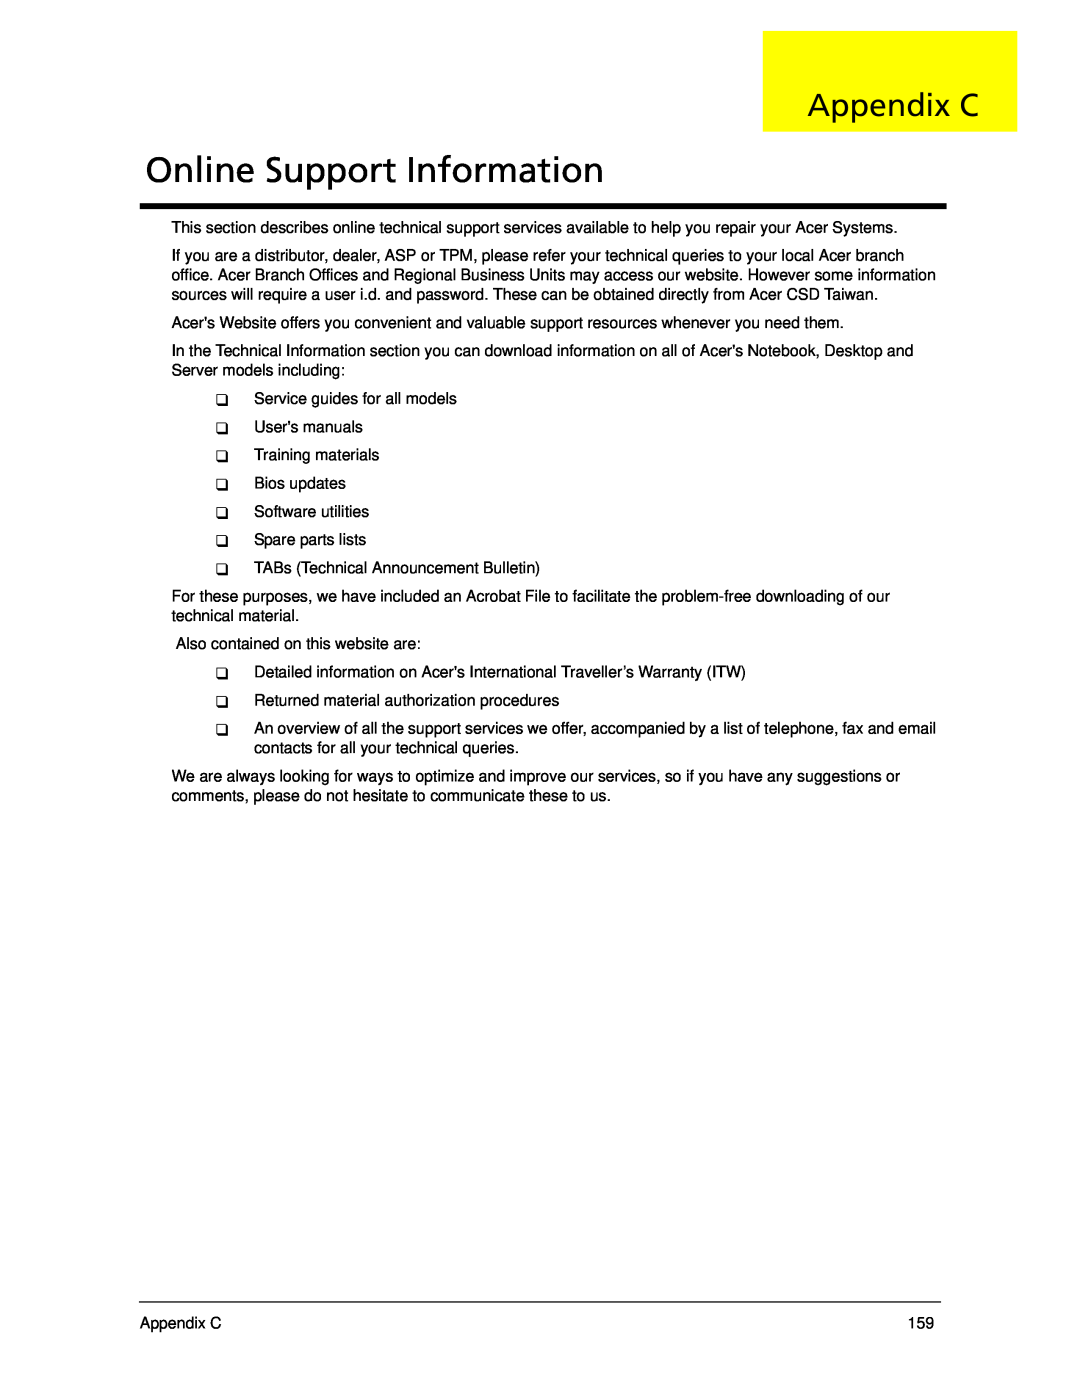 Acer 5330 manual Online Support Information, Appendix C 